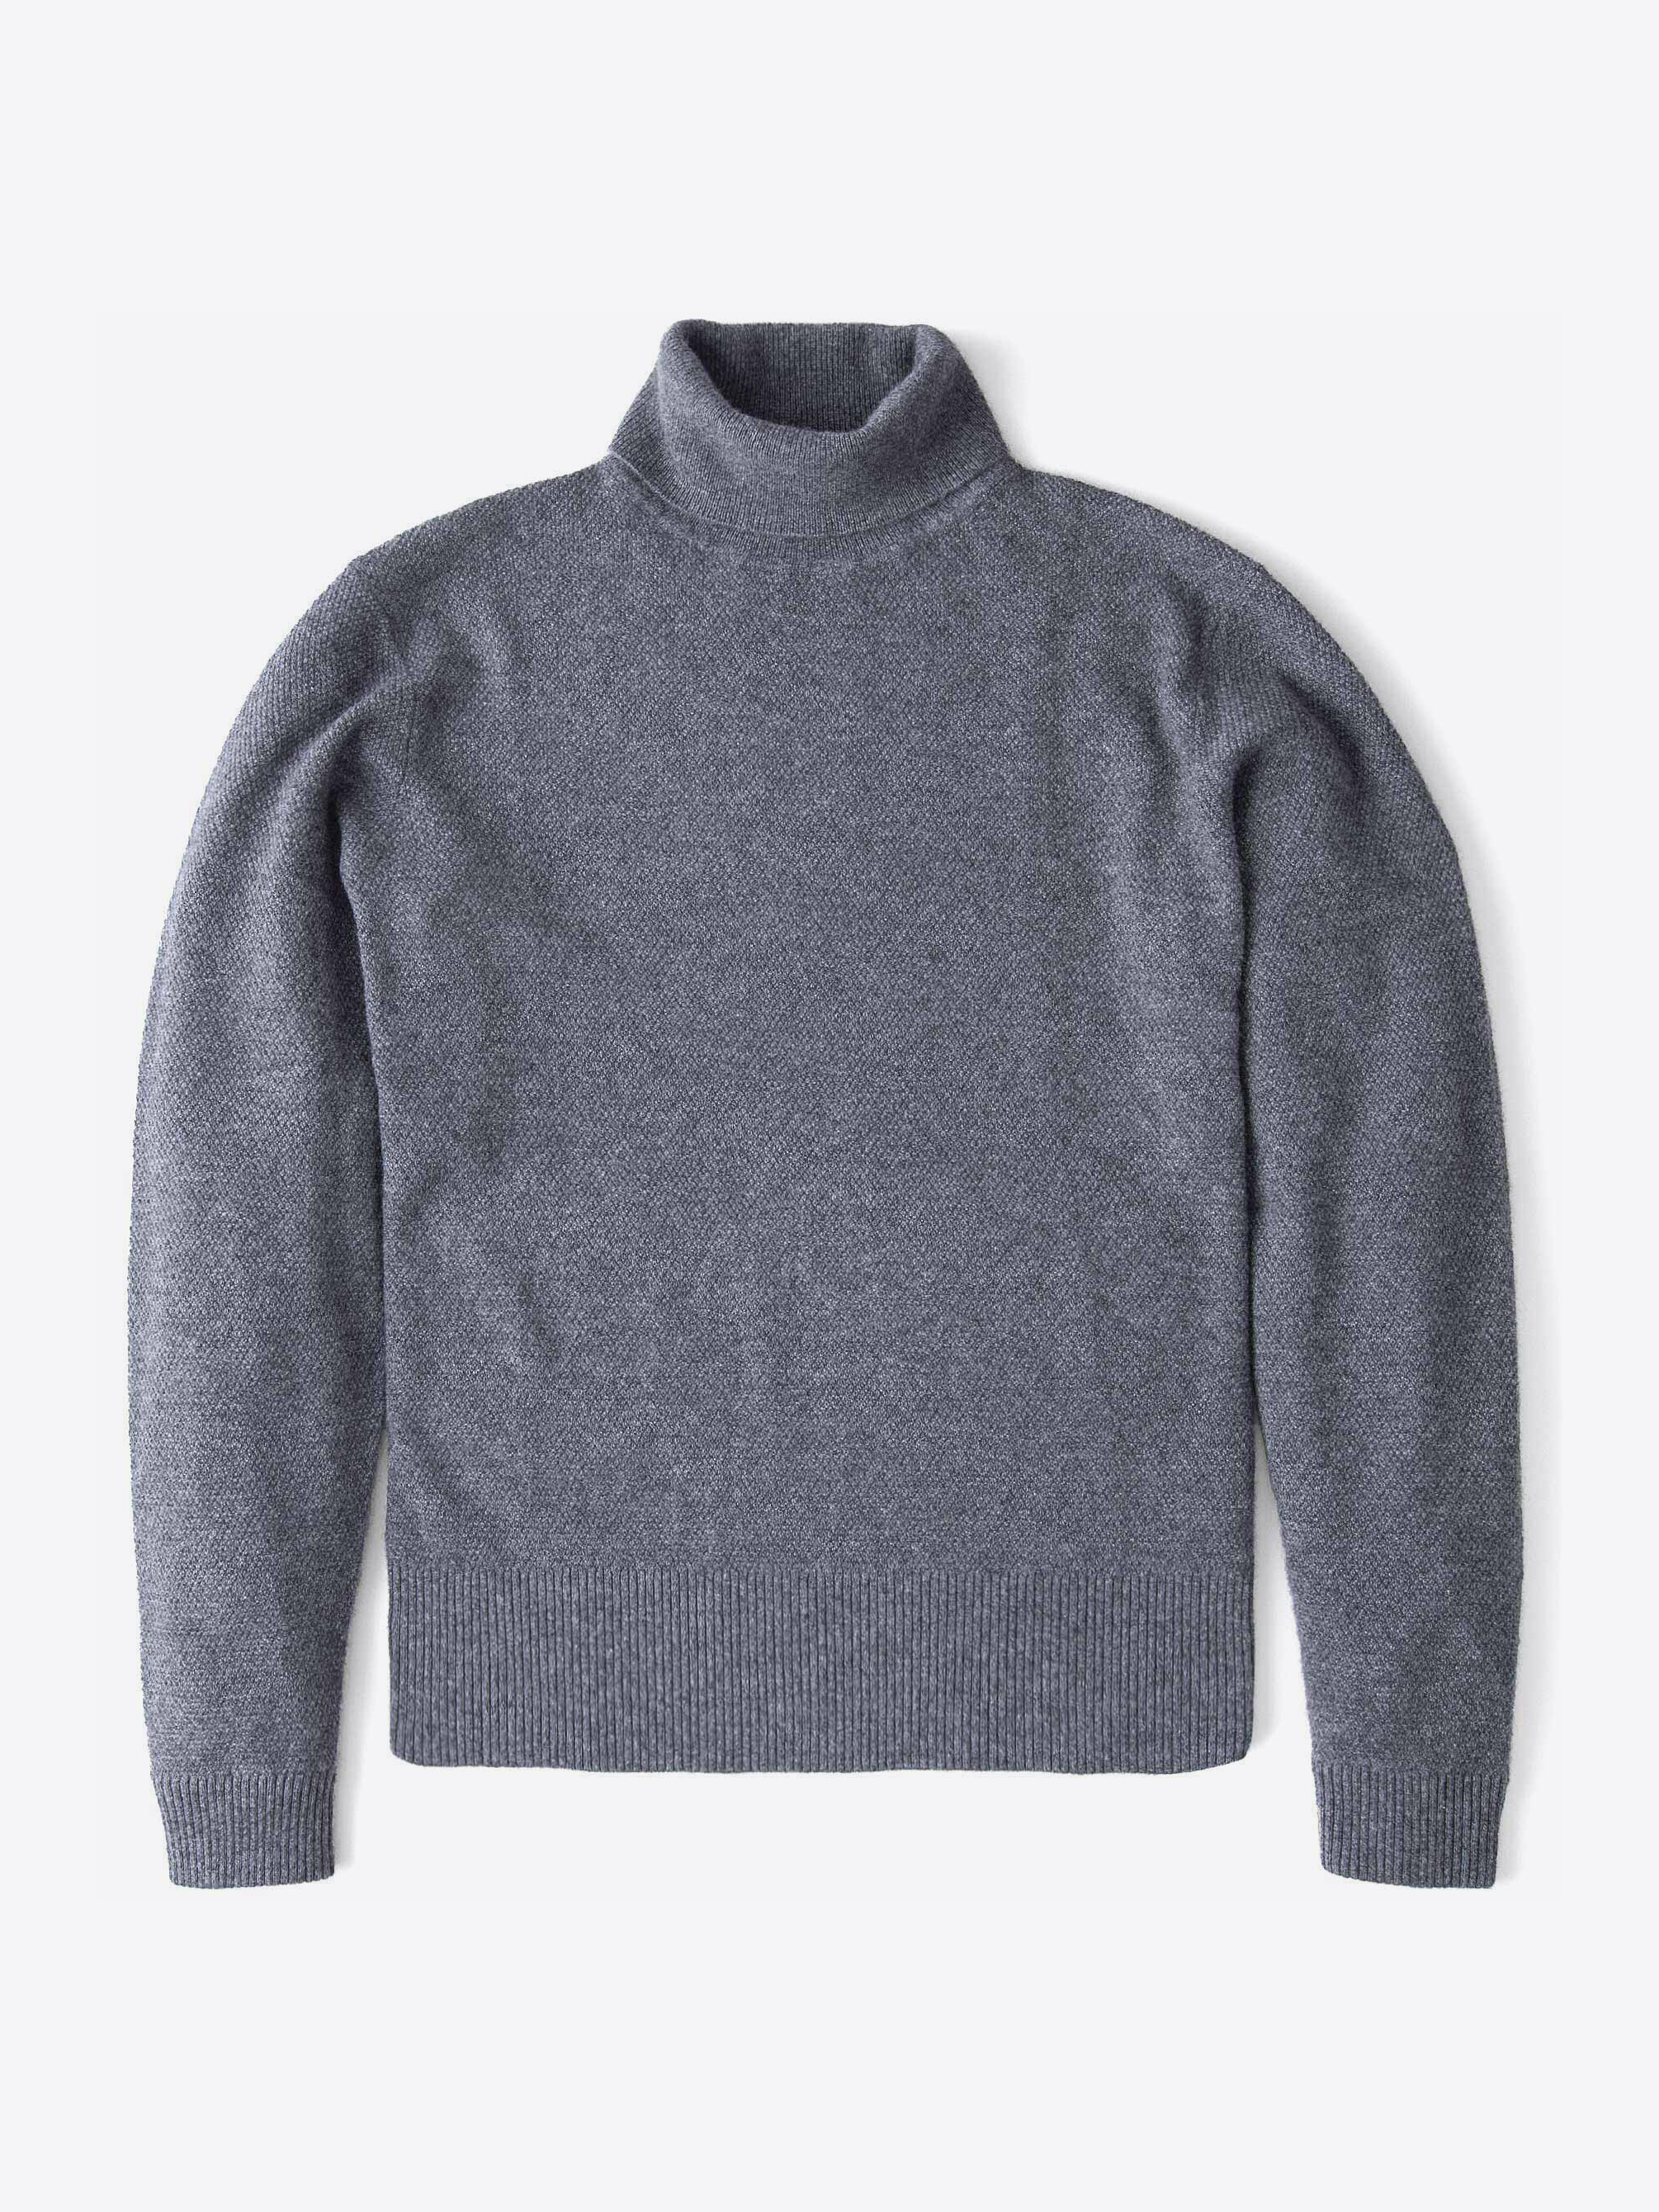 Zoom Image of Grey Cobble Stitch Cashmere Turtleneck Sweater